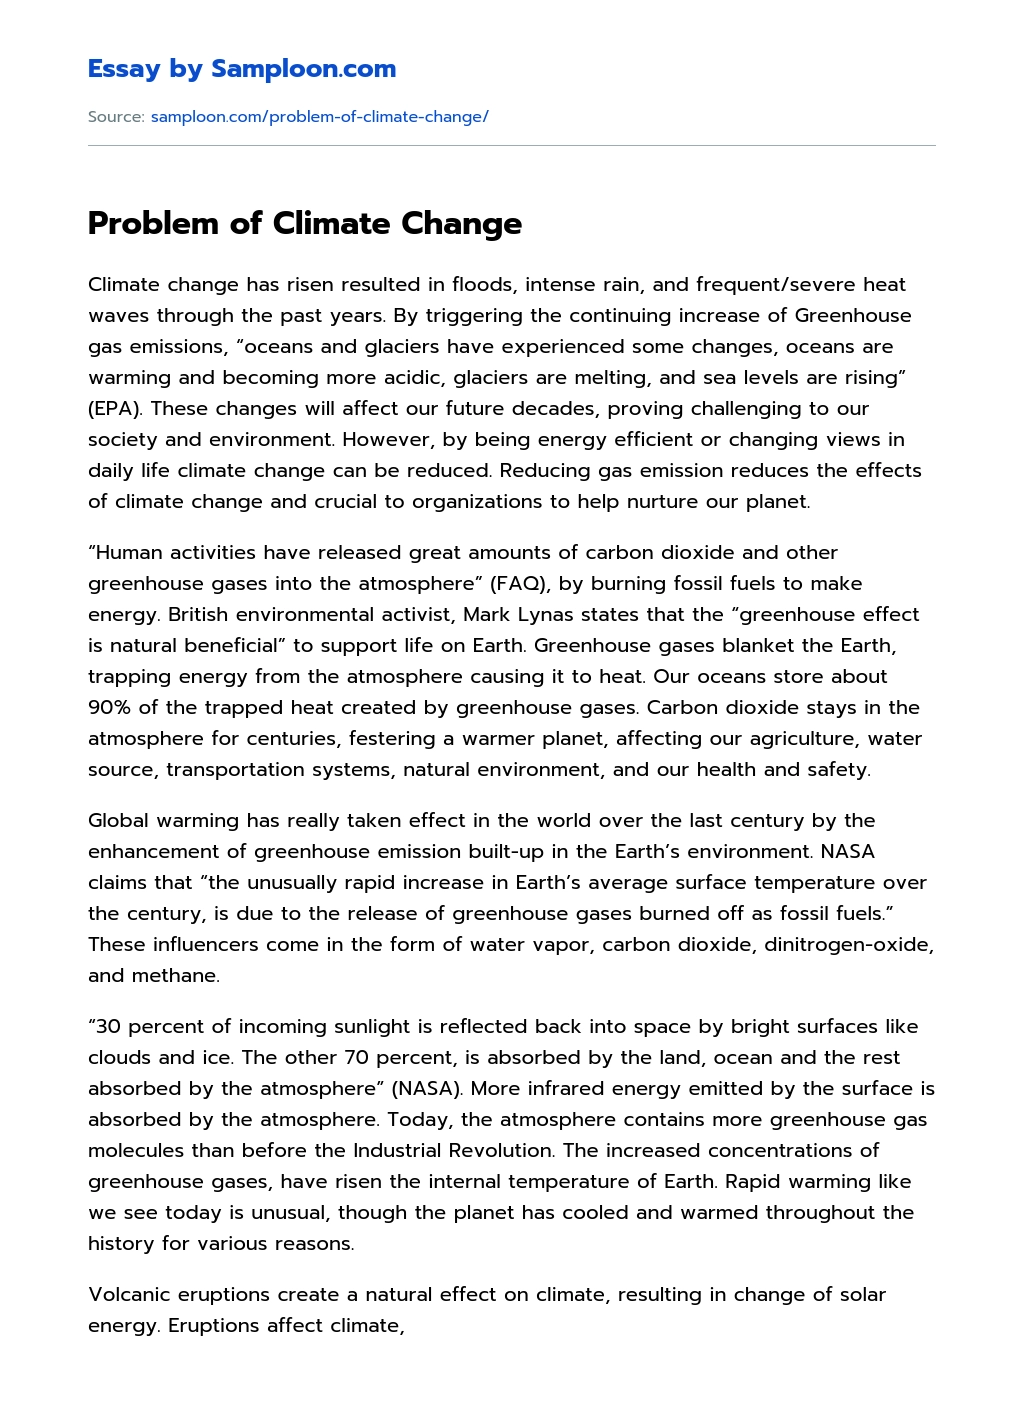 Problem of Climate Change essay